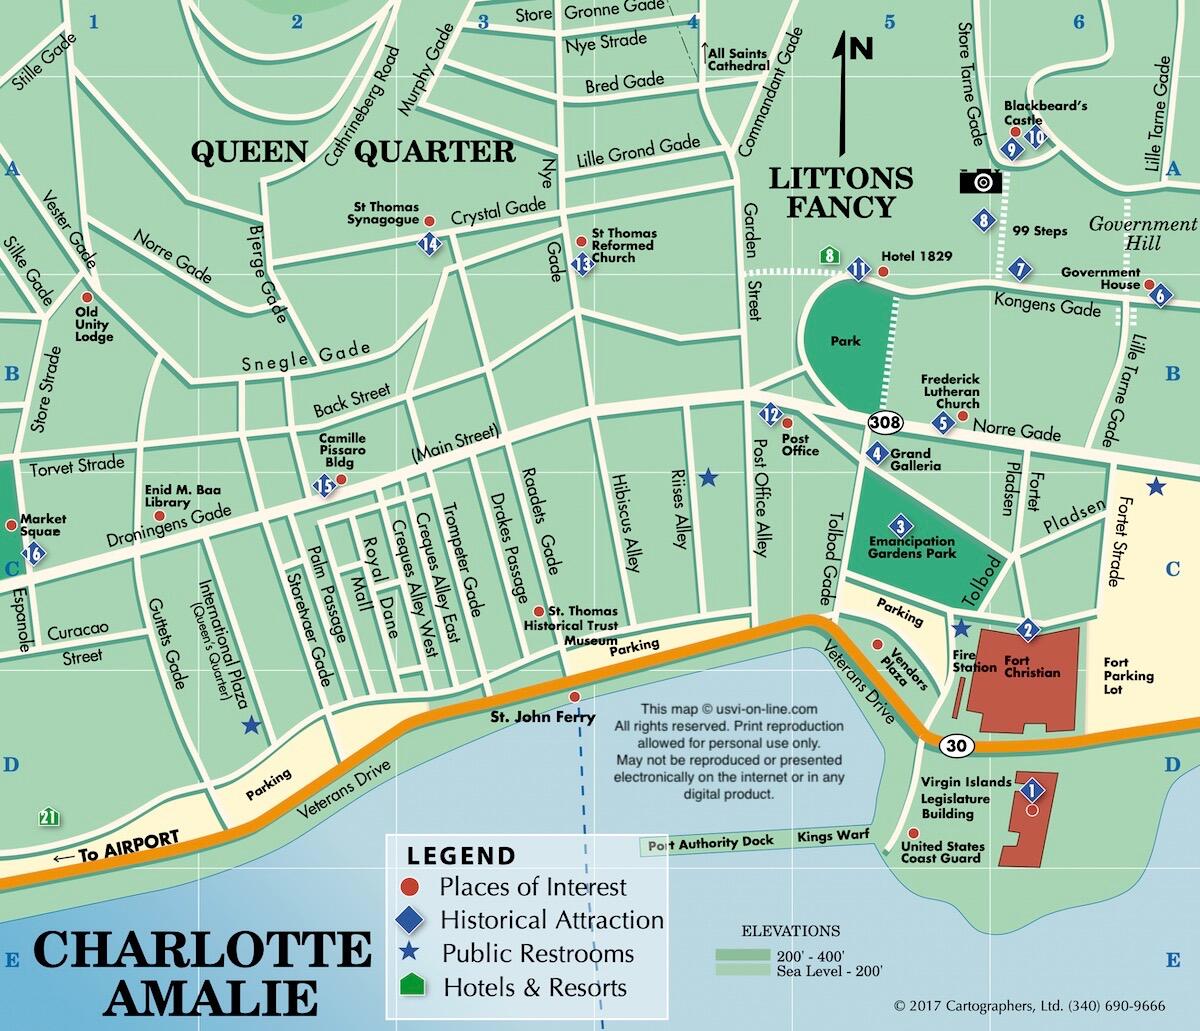 charlotte-amalie-st-thomas-map.jpg